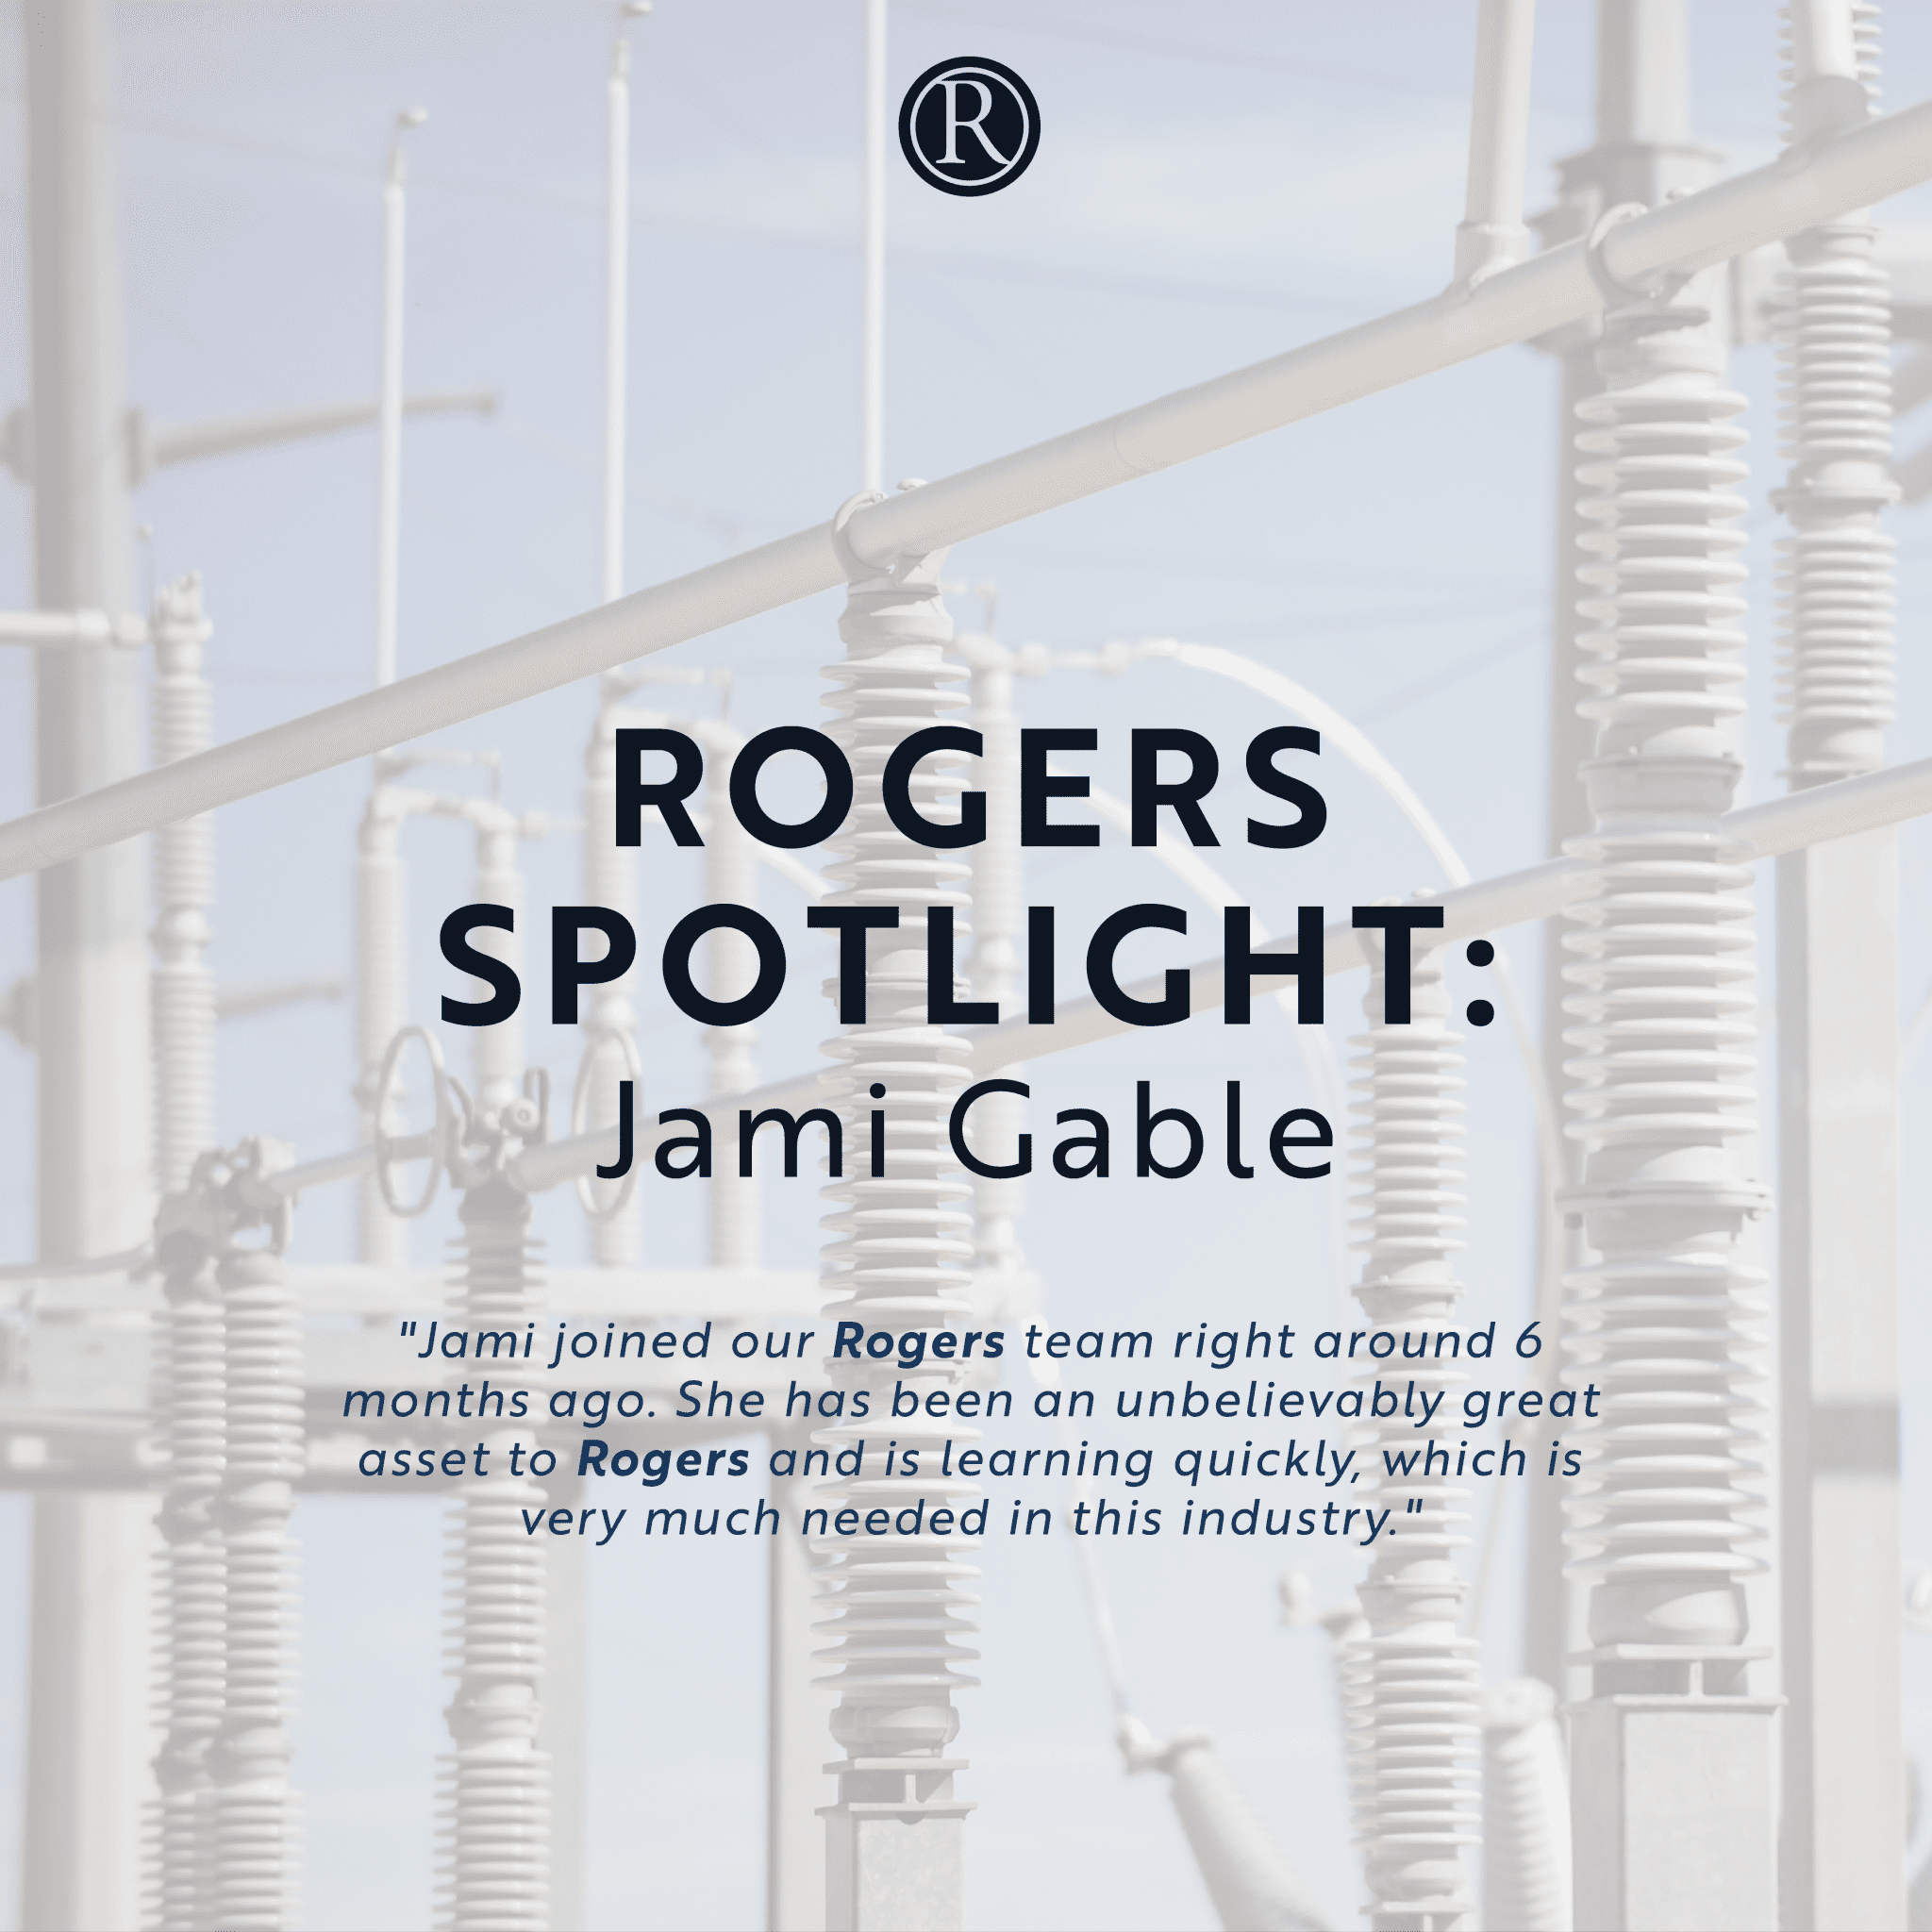 Rogers Spotlight: Jami Gable